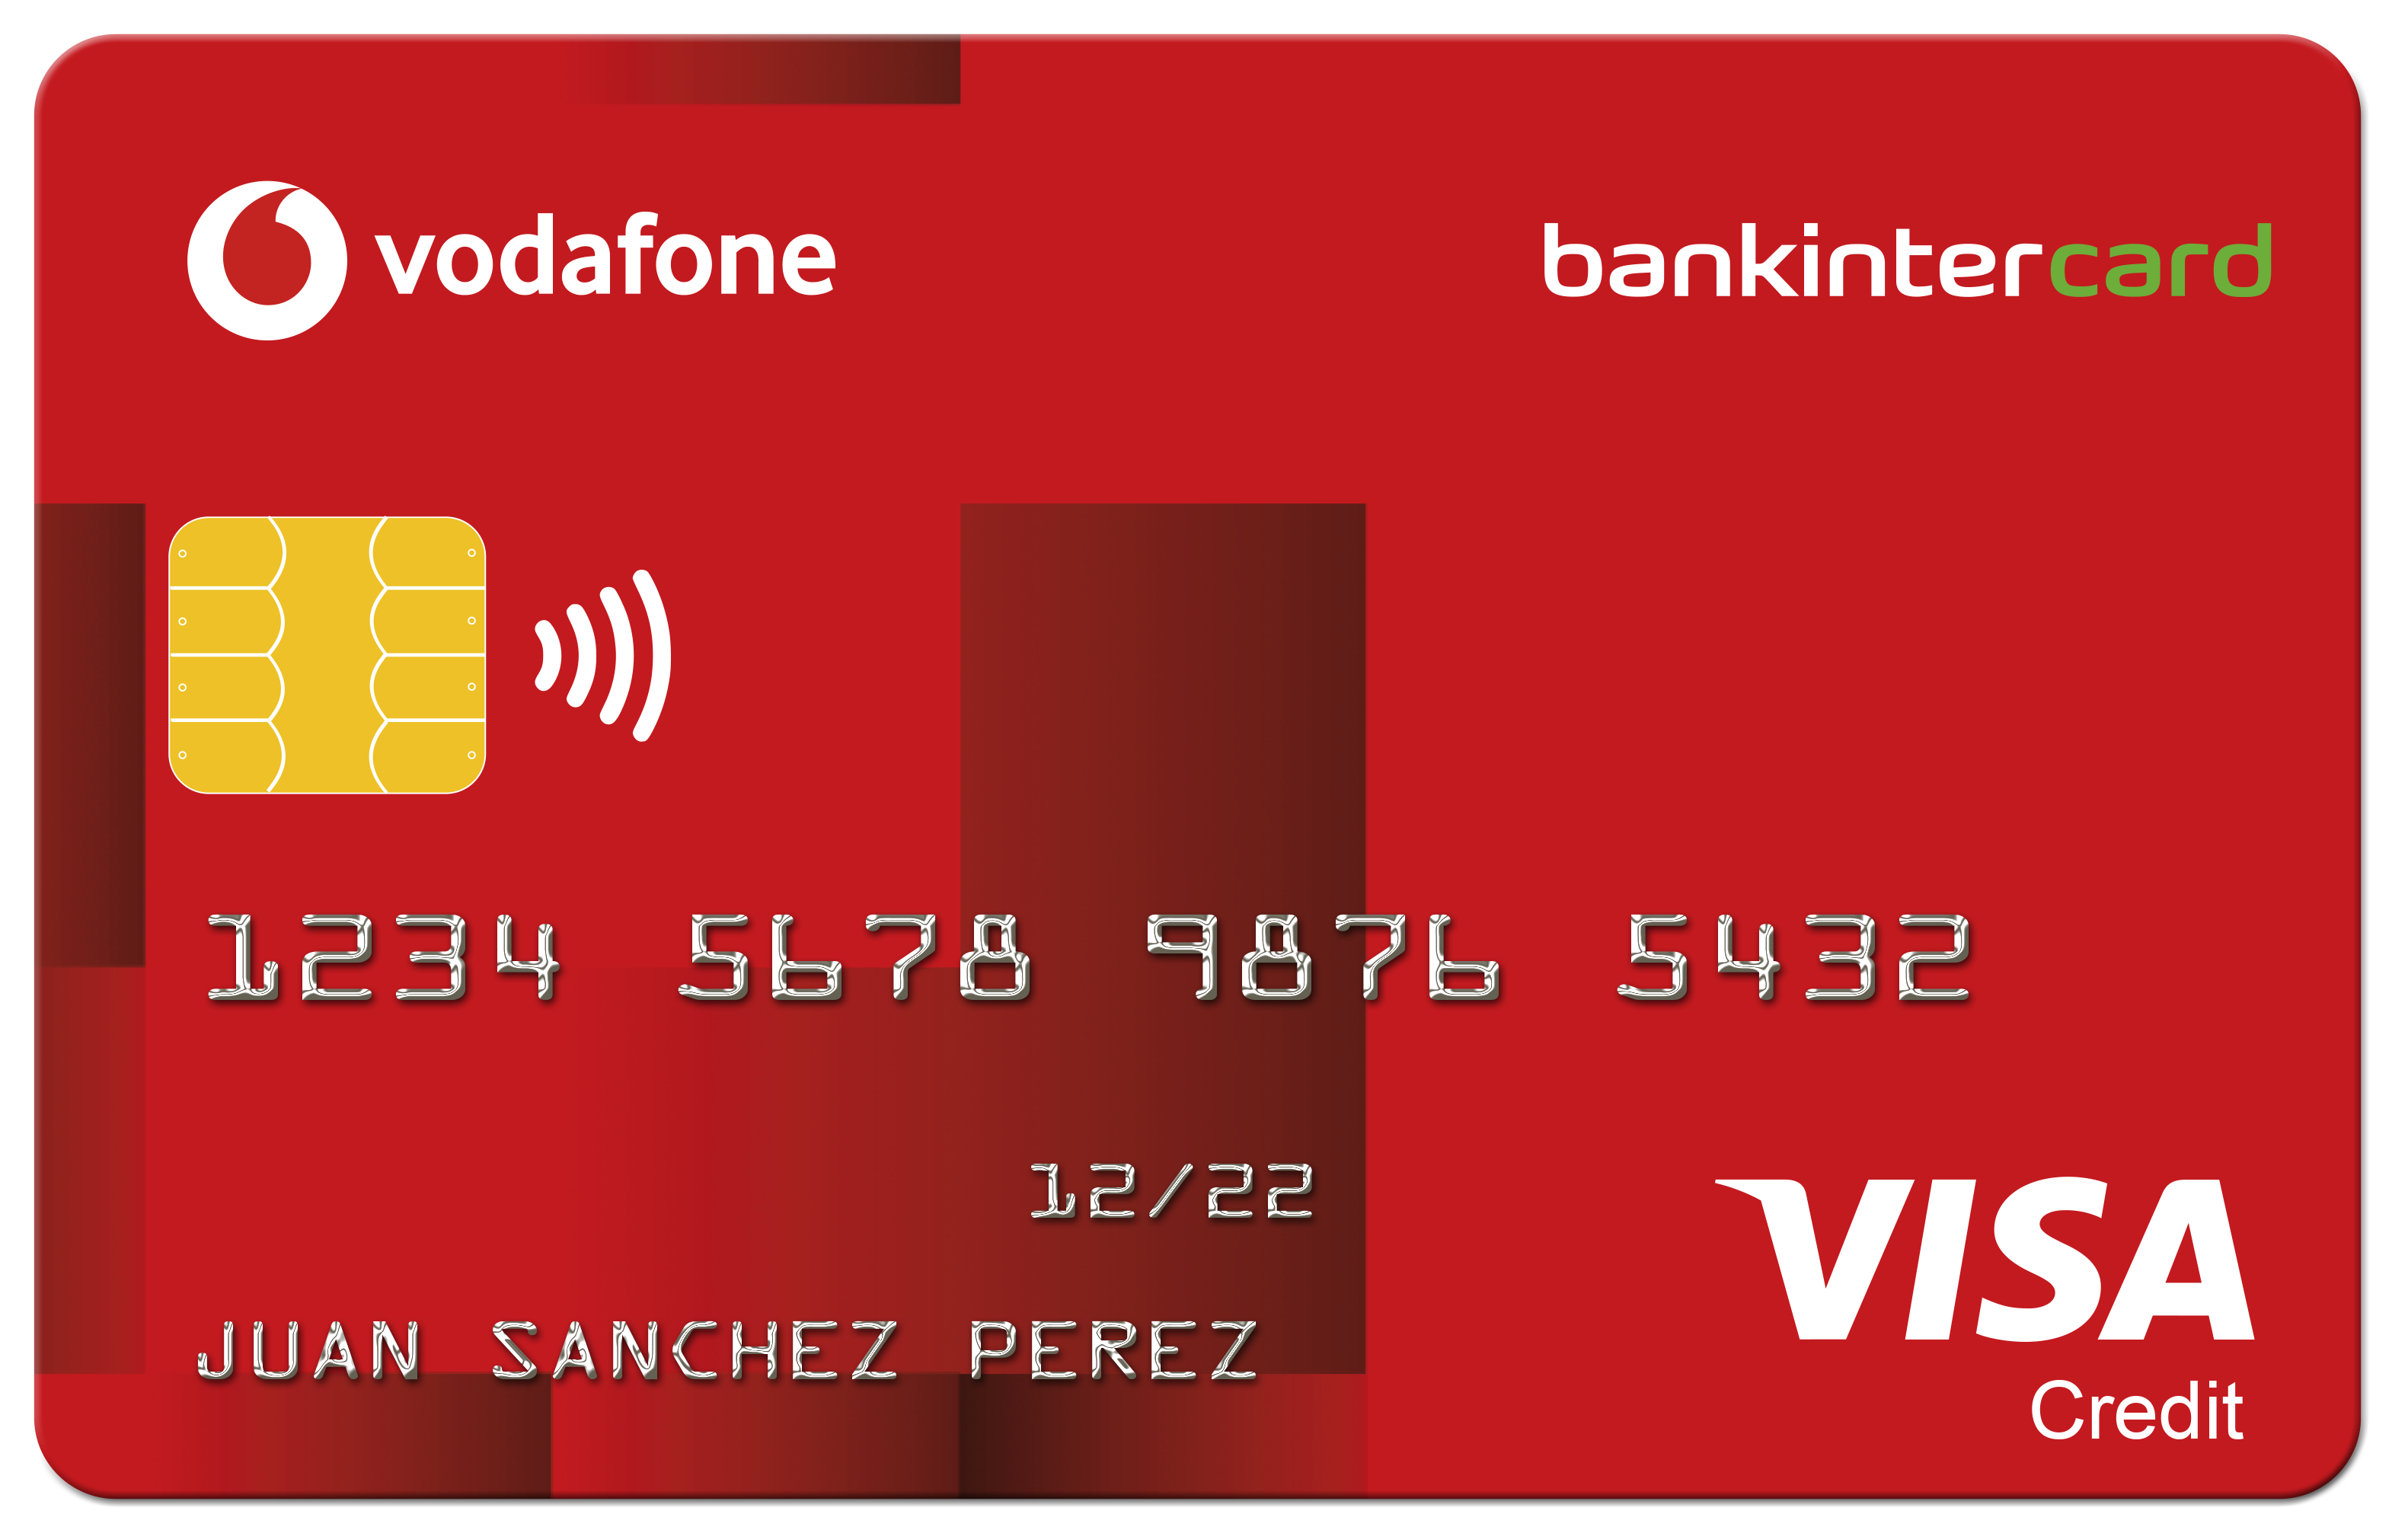 bankintercard Visa Vodafone